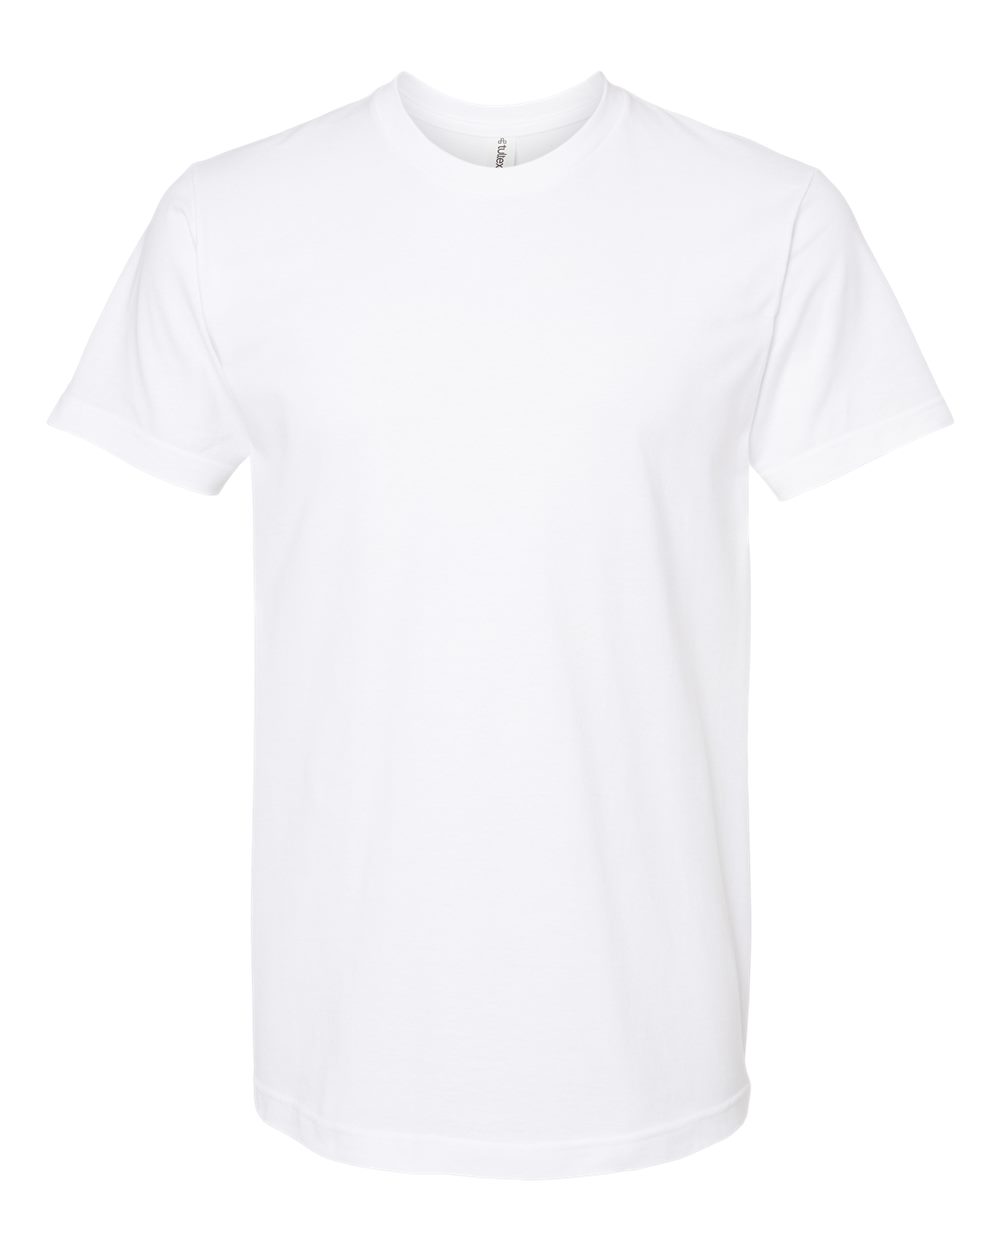 Pretreated Tultex 202 Unisex Fine Jersey T-Shirt - White